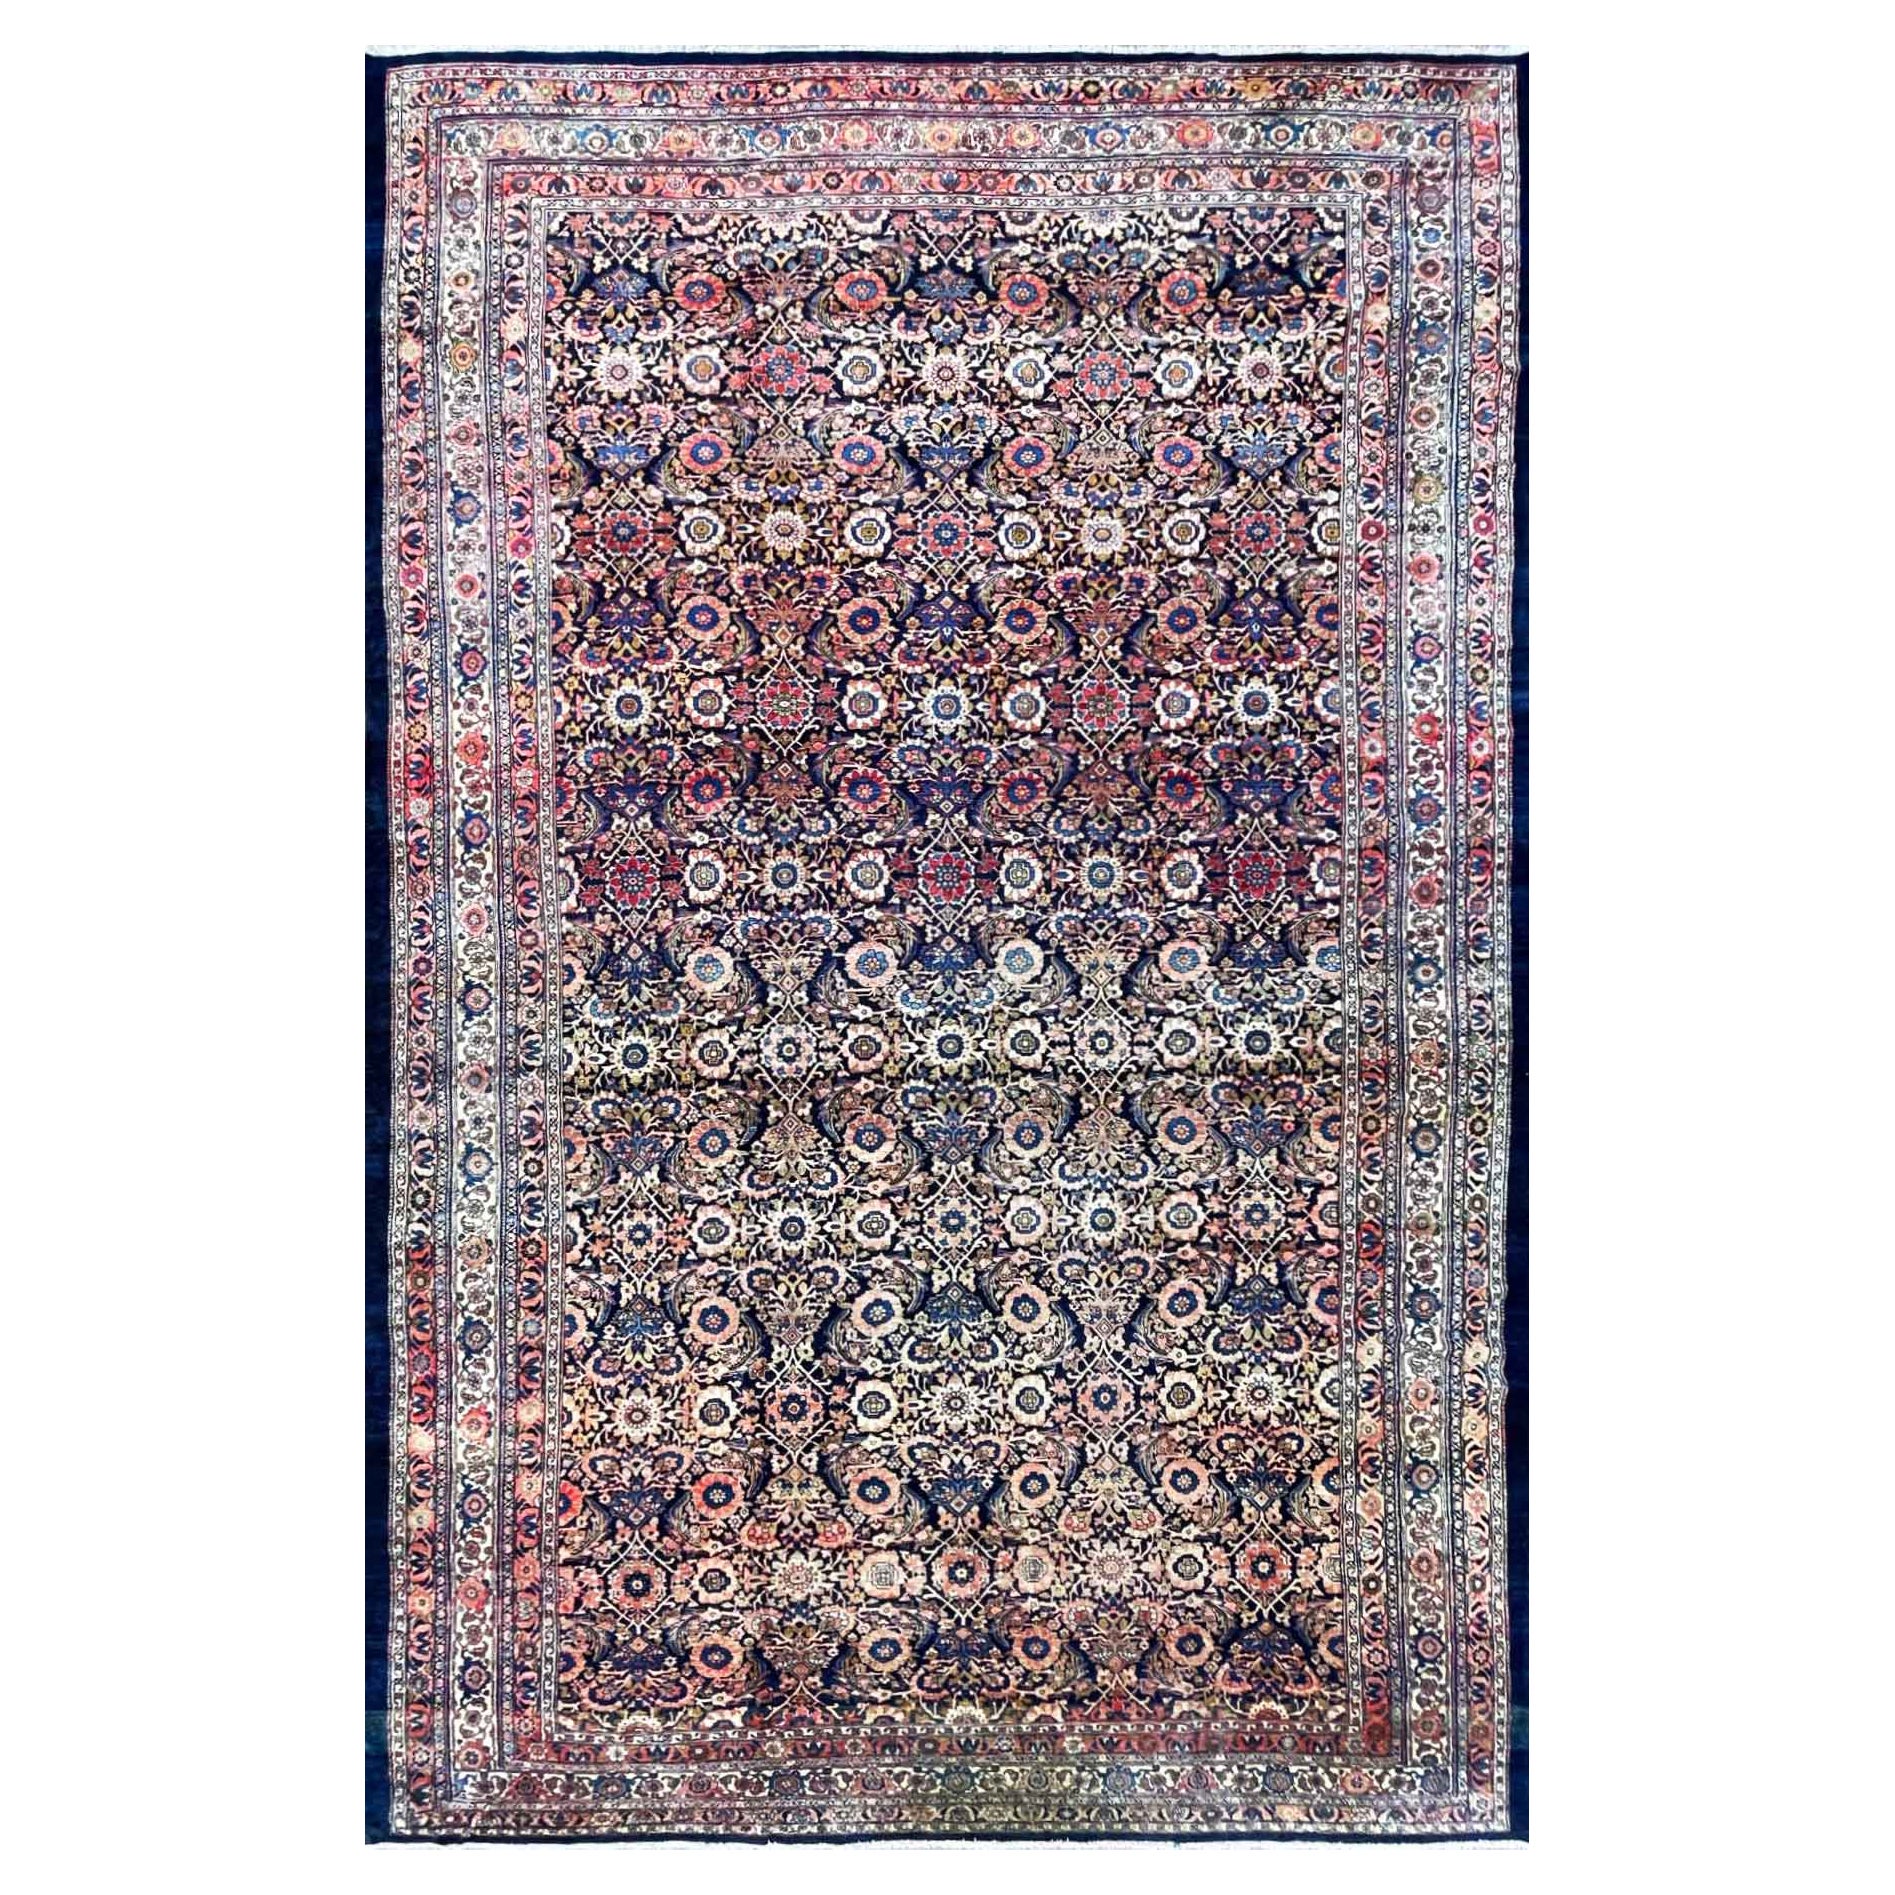 Antique Oversize Persian Malayer Carpet